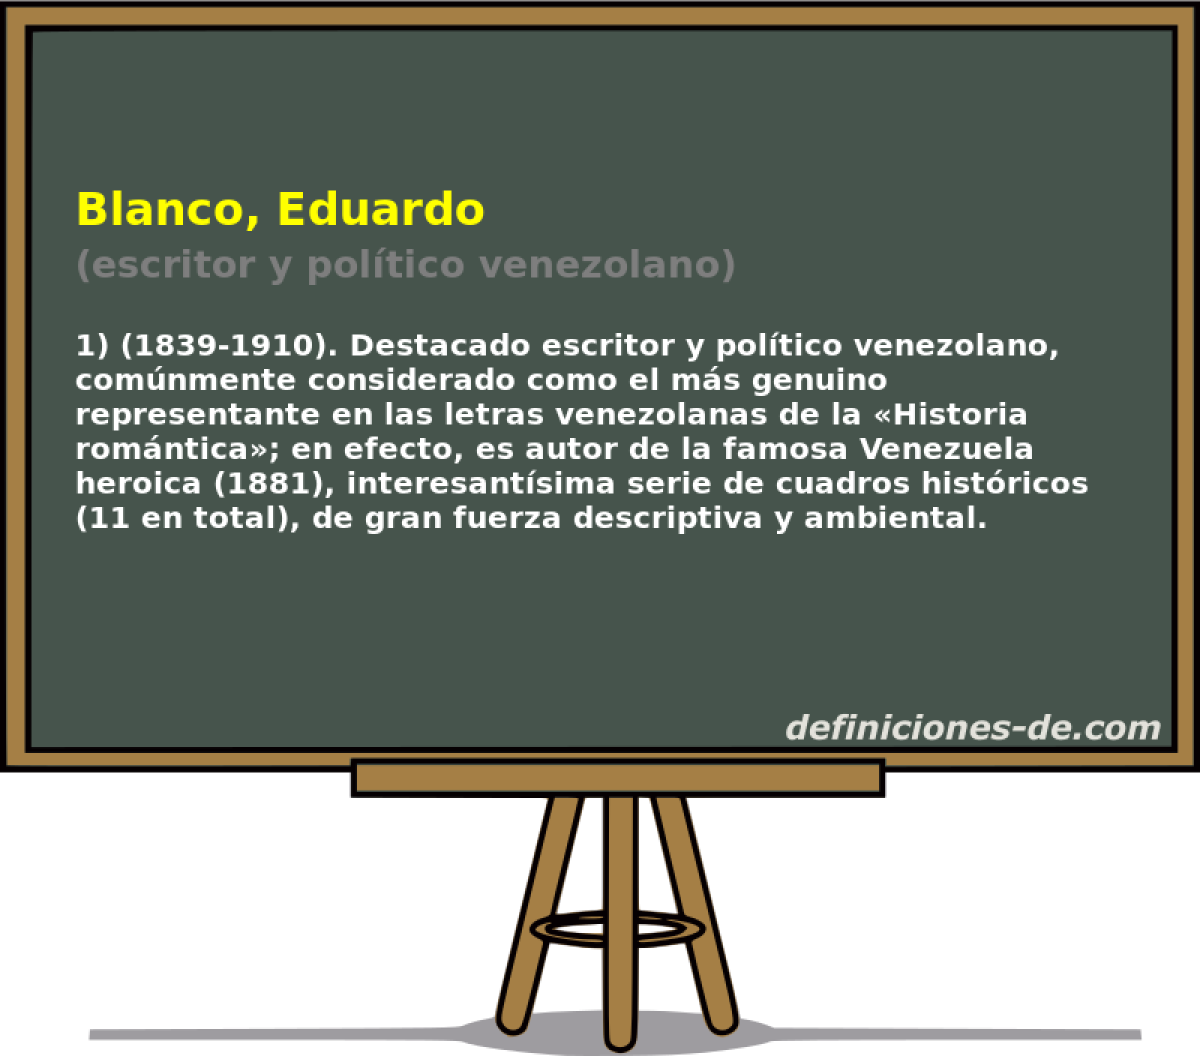 Blanco, Eduardo (escritor y poltico venezolano)